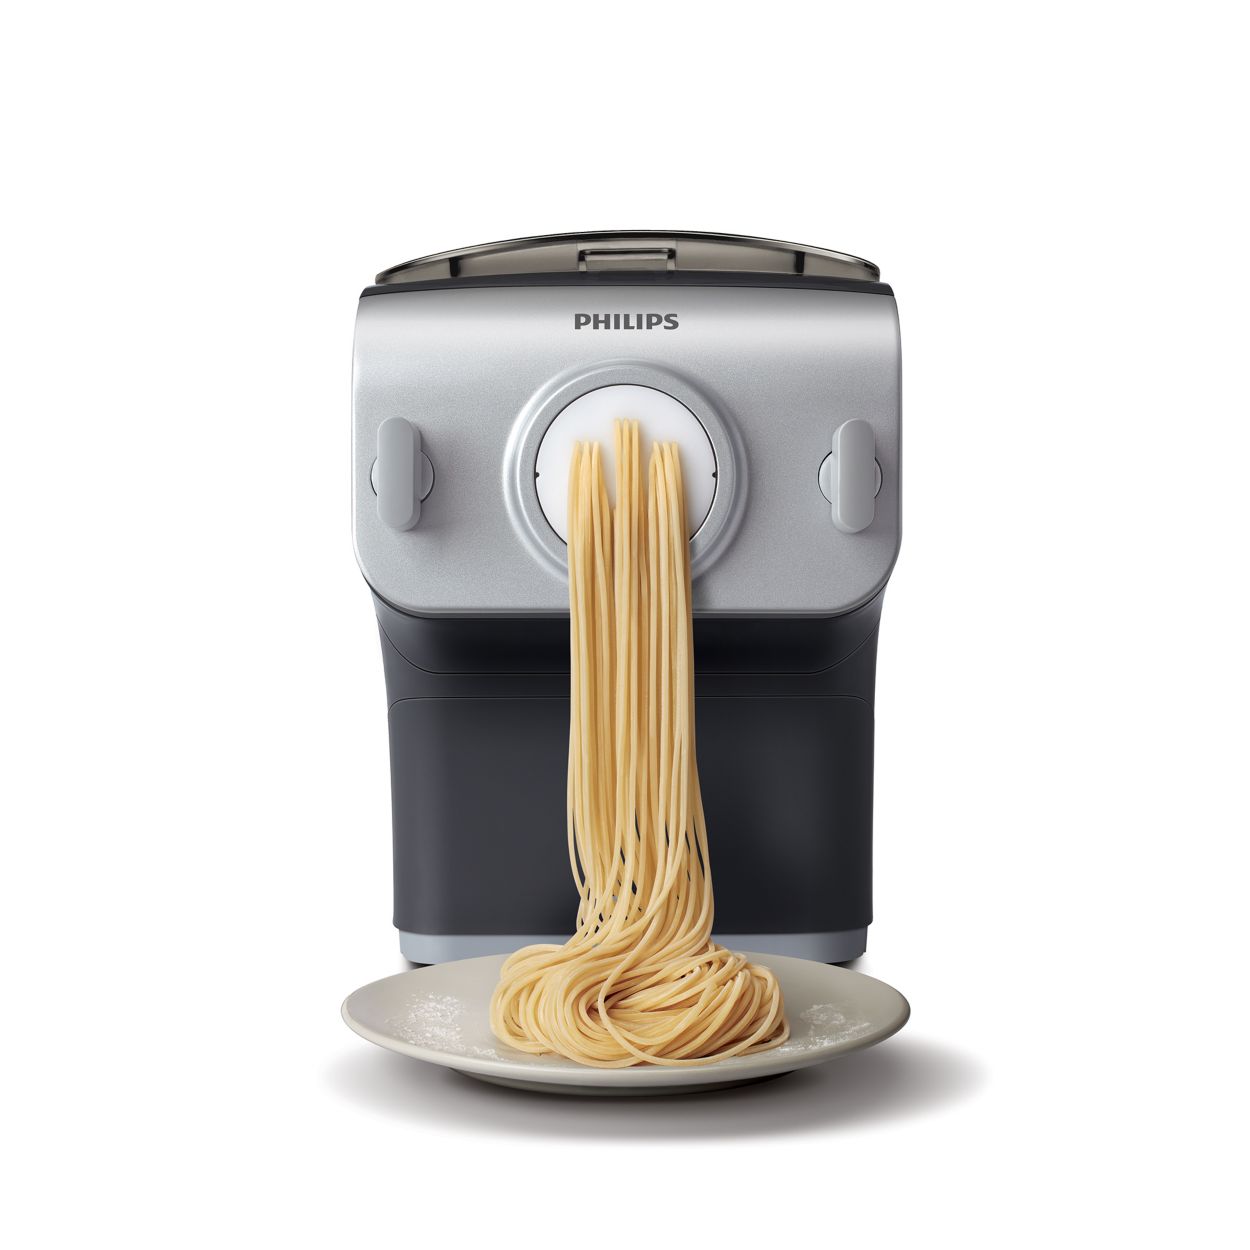 Philips Pasta Maker: Fresh Homemade Pasta in Minutes!